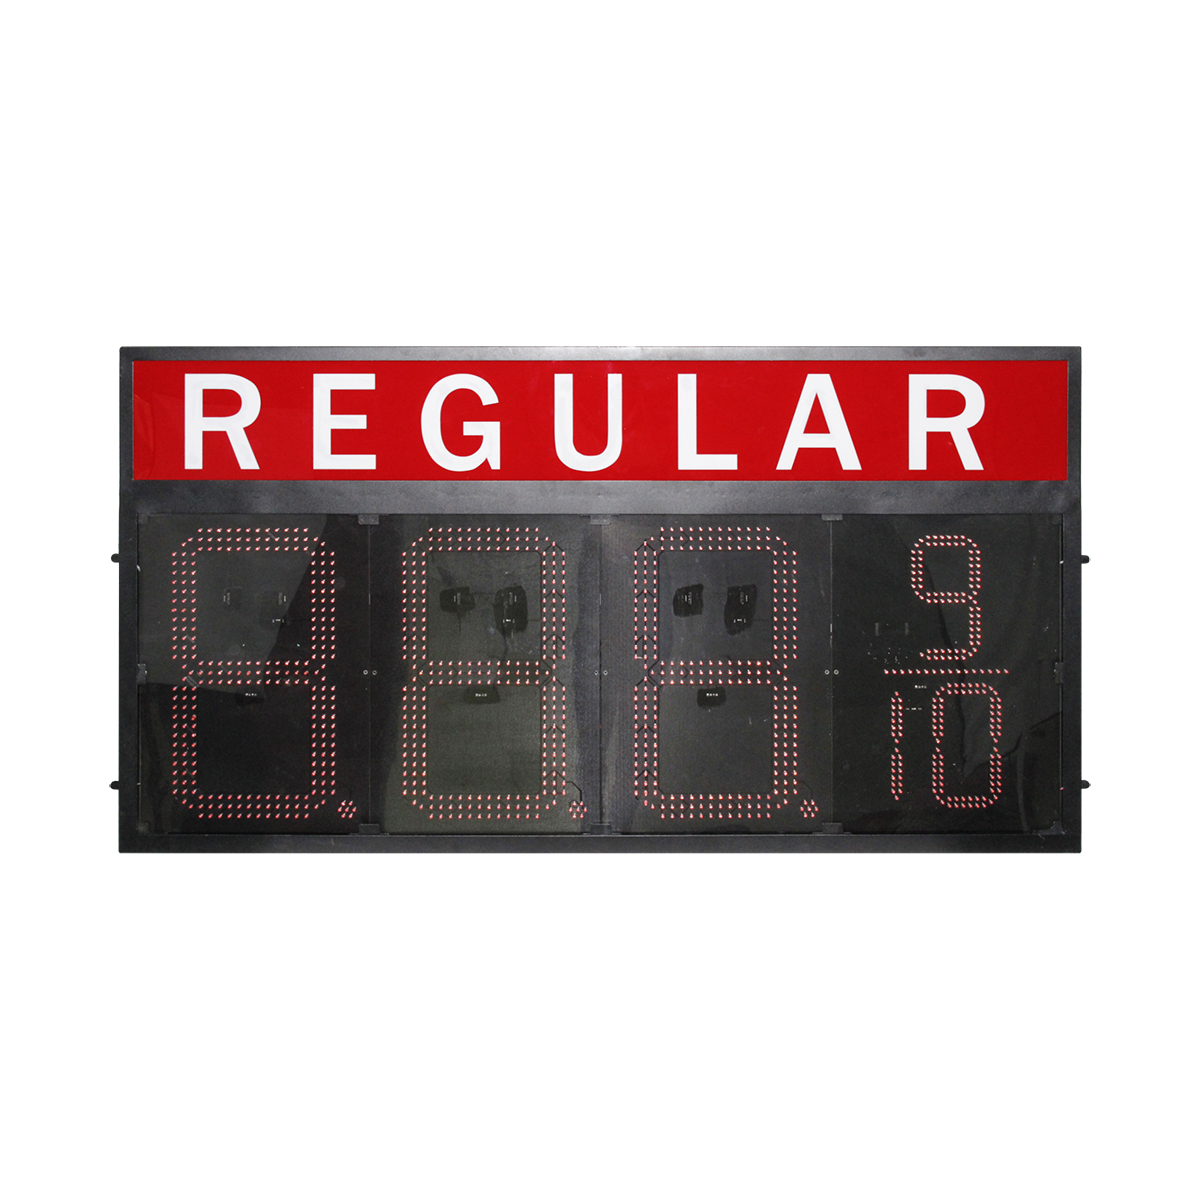 American Regular Gas Led Signs